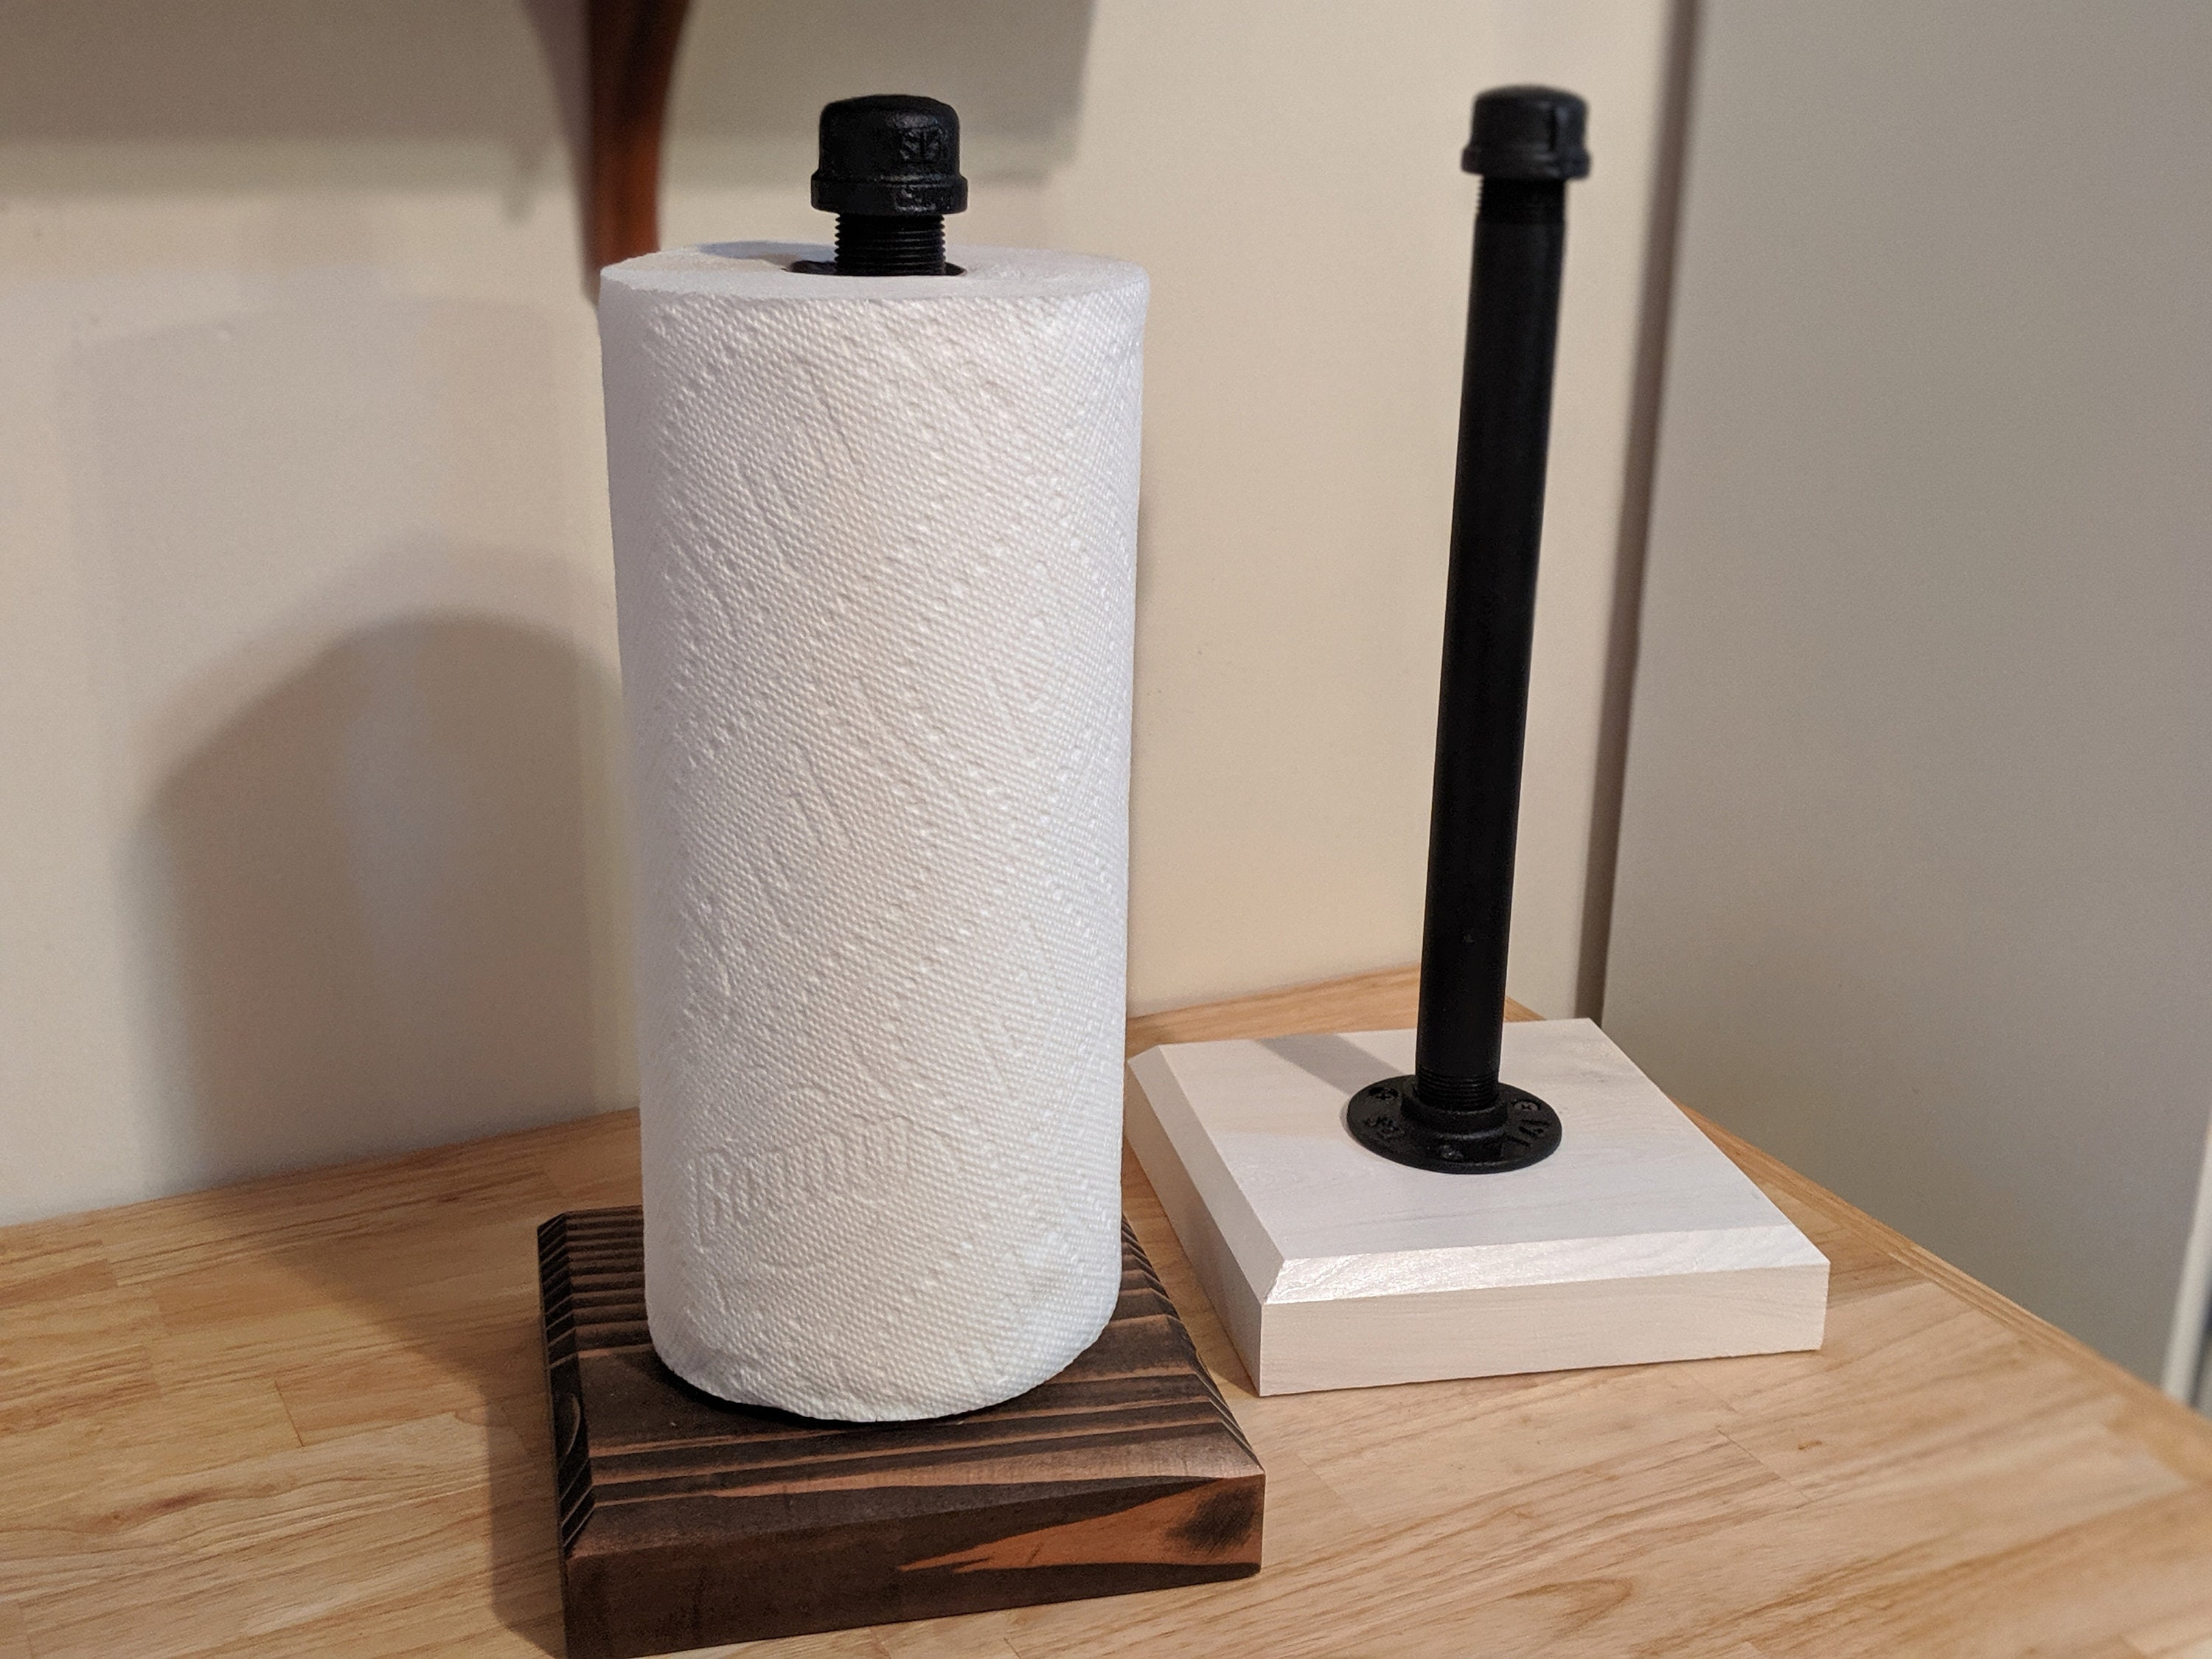 Industrial Pipe Design White Metal Kitchen Paper Towel Roll Dispenser Holder